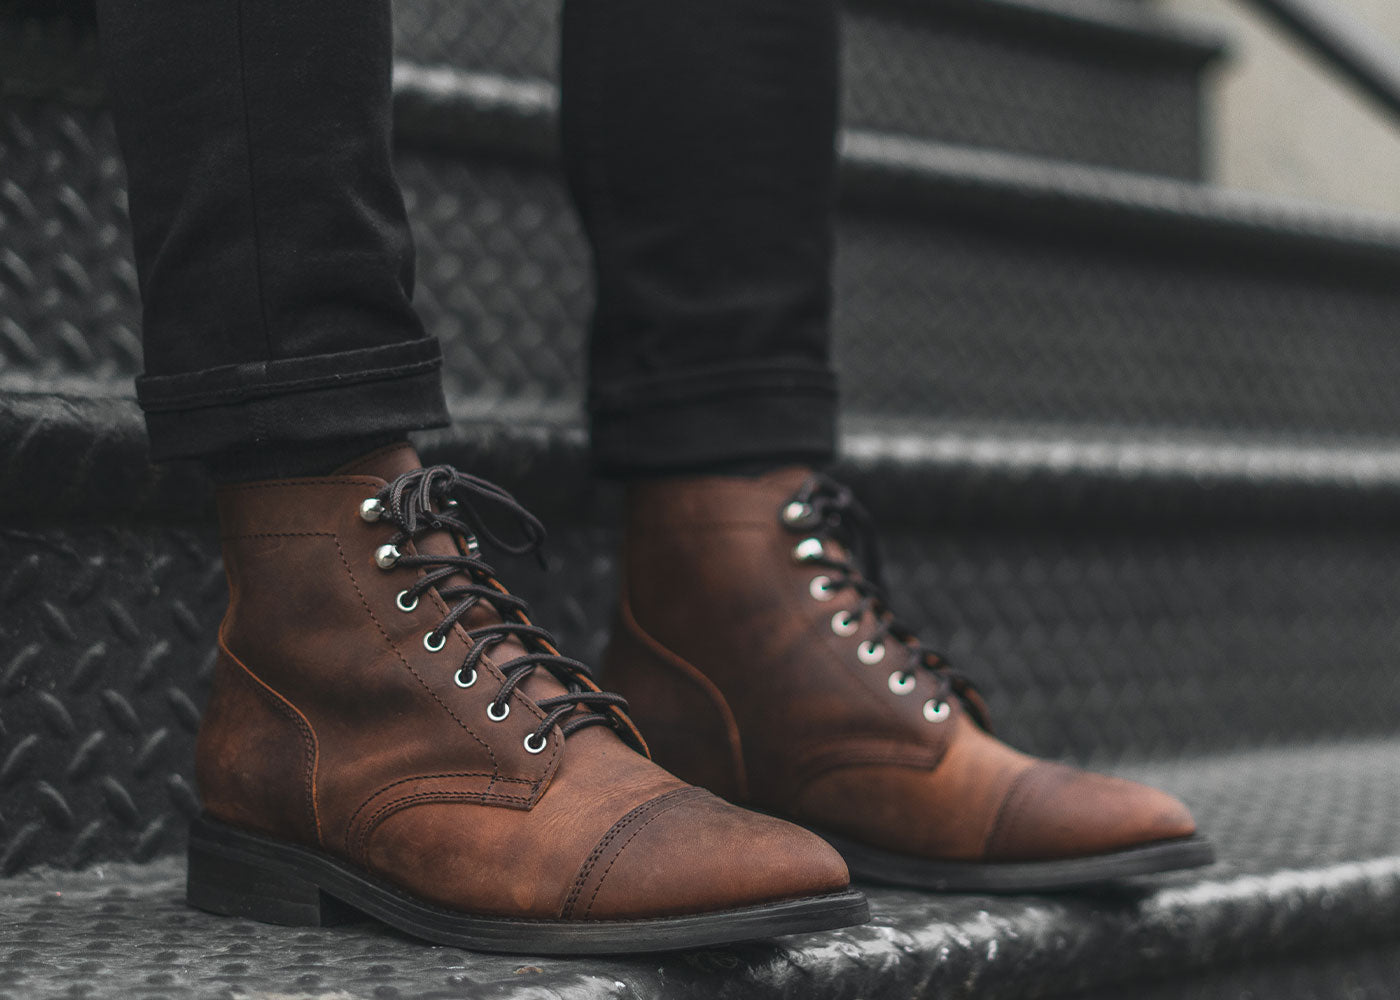 Buy Brown Sneakers for Men by Wknd Online